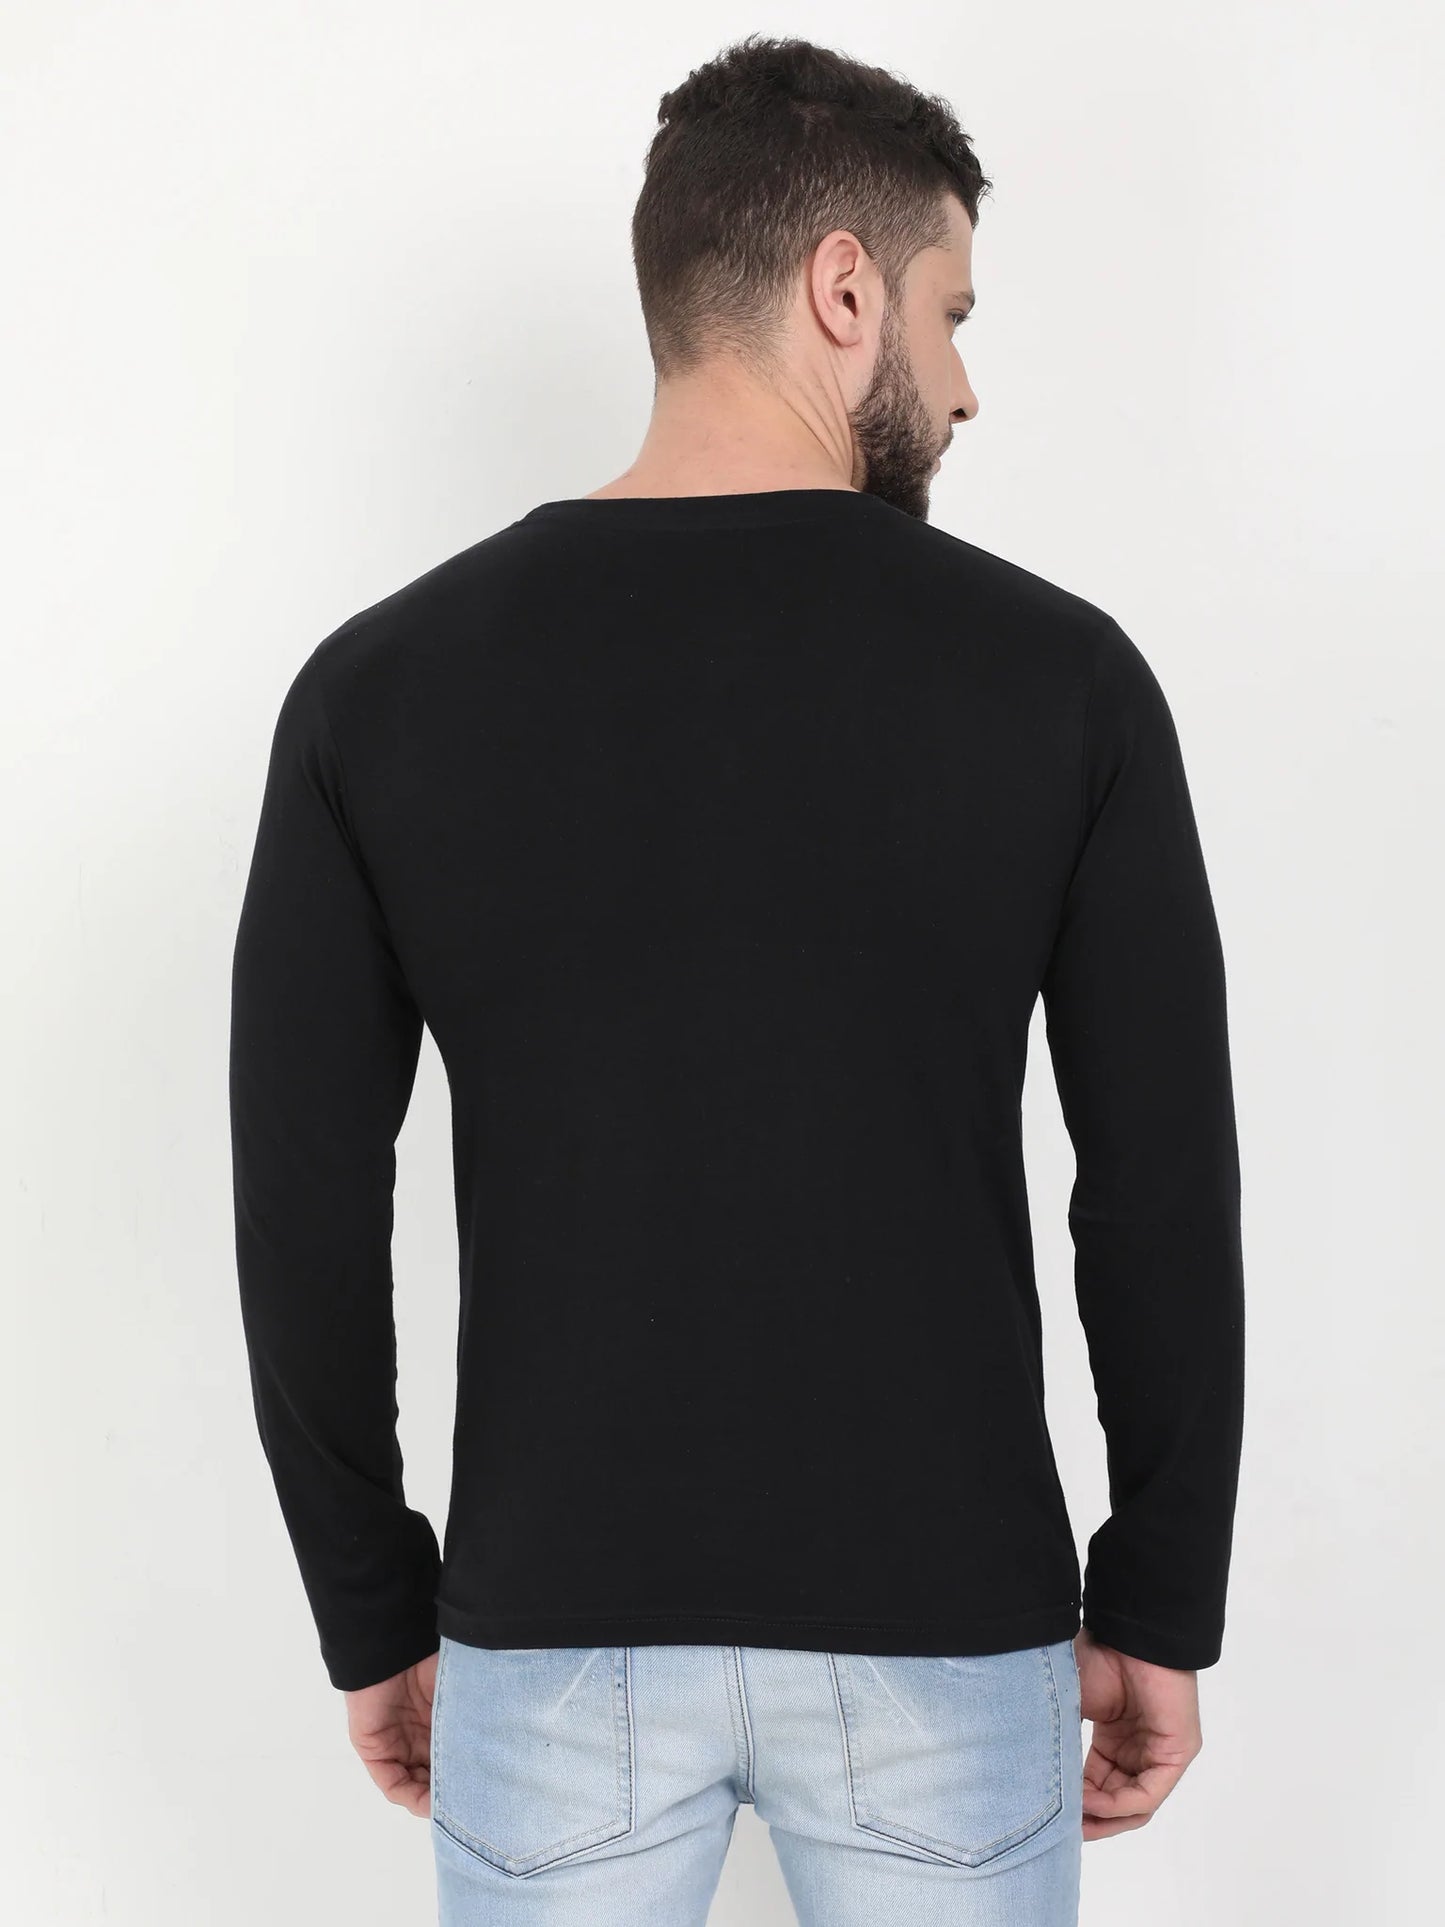 Men's Cotton Plain Round Neck Full Sleeve Black Color T-Shirt